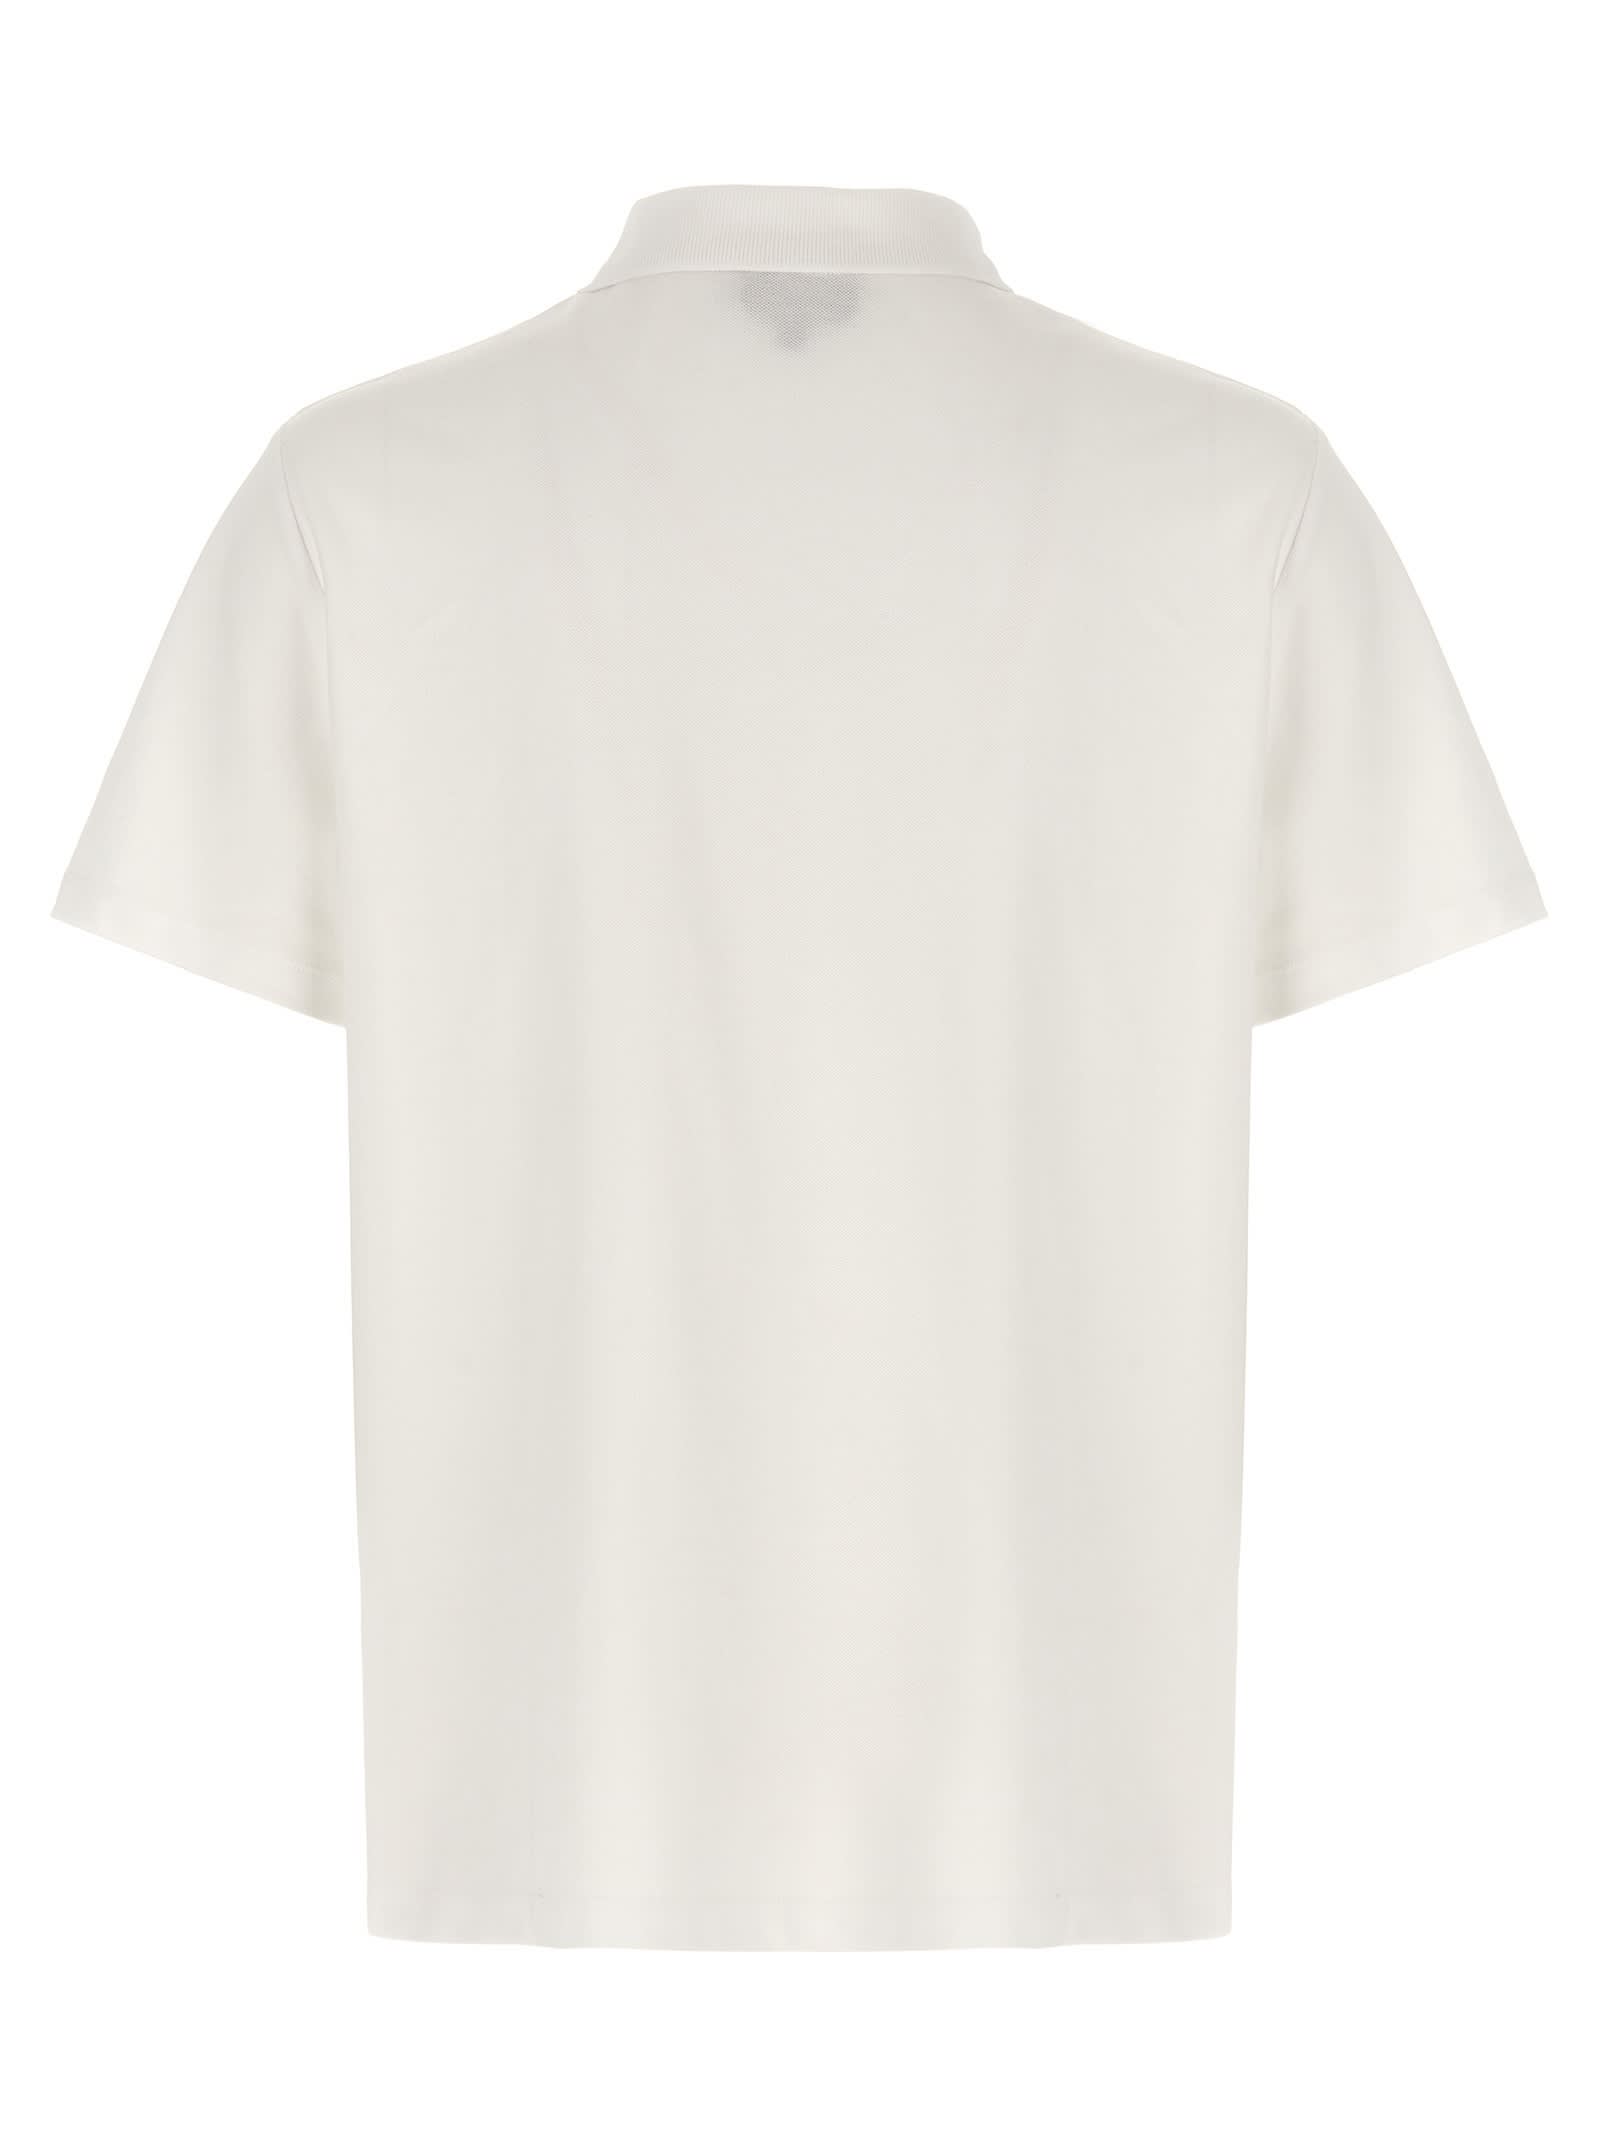 Shop Apc Logo Embroidery Polo Shirt In White